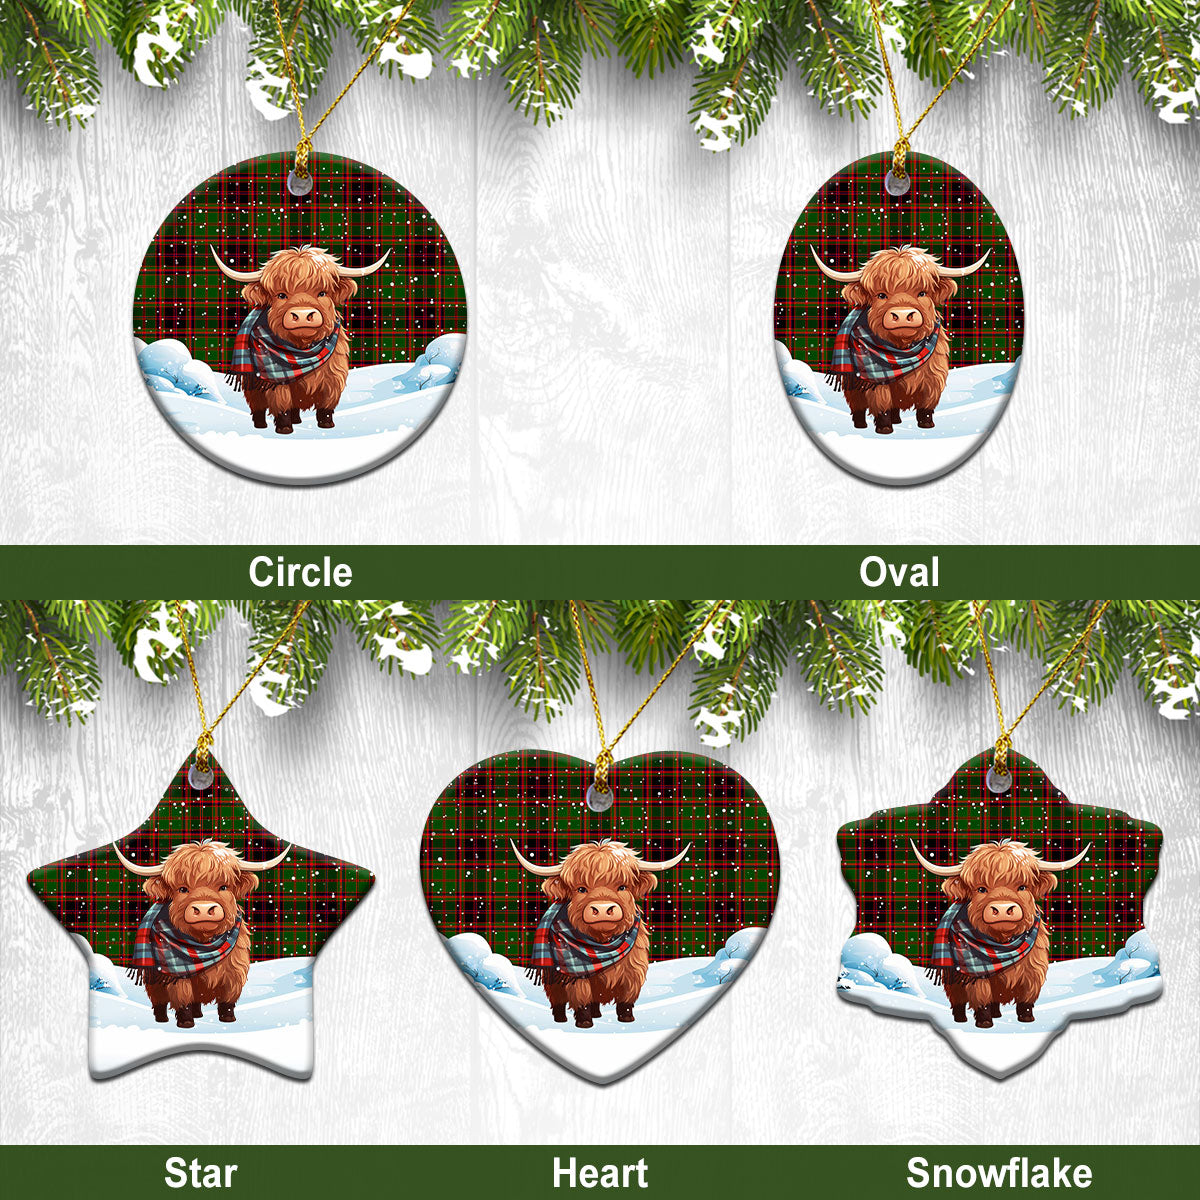 Buchan Modern Tartan Christmas Ceramic Ornament - Highland Cows Snow Style